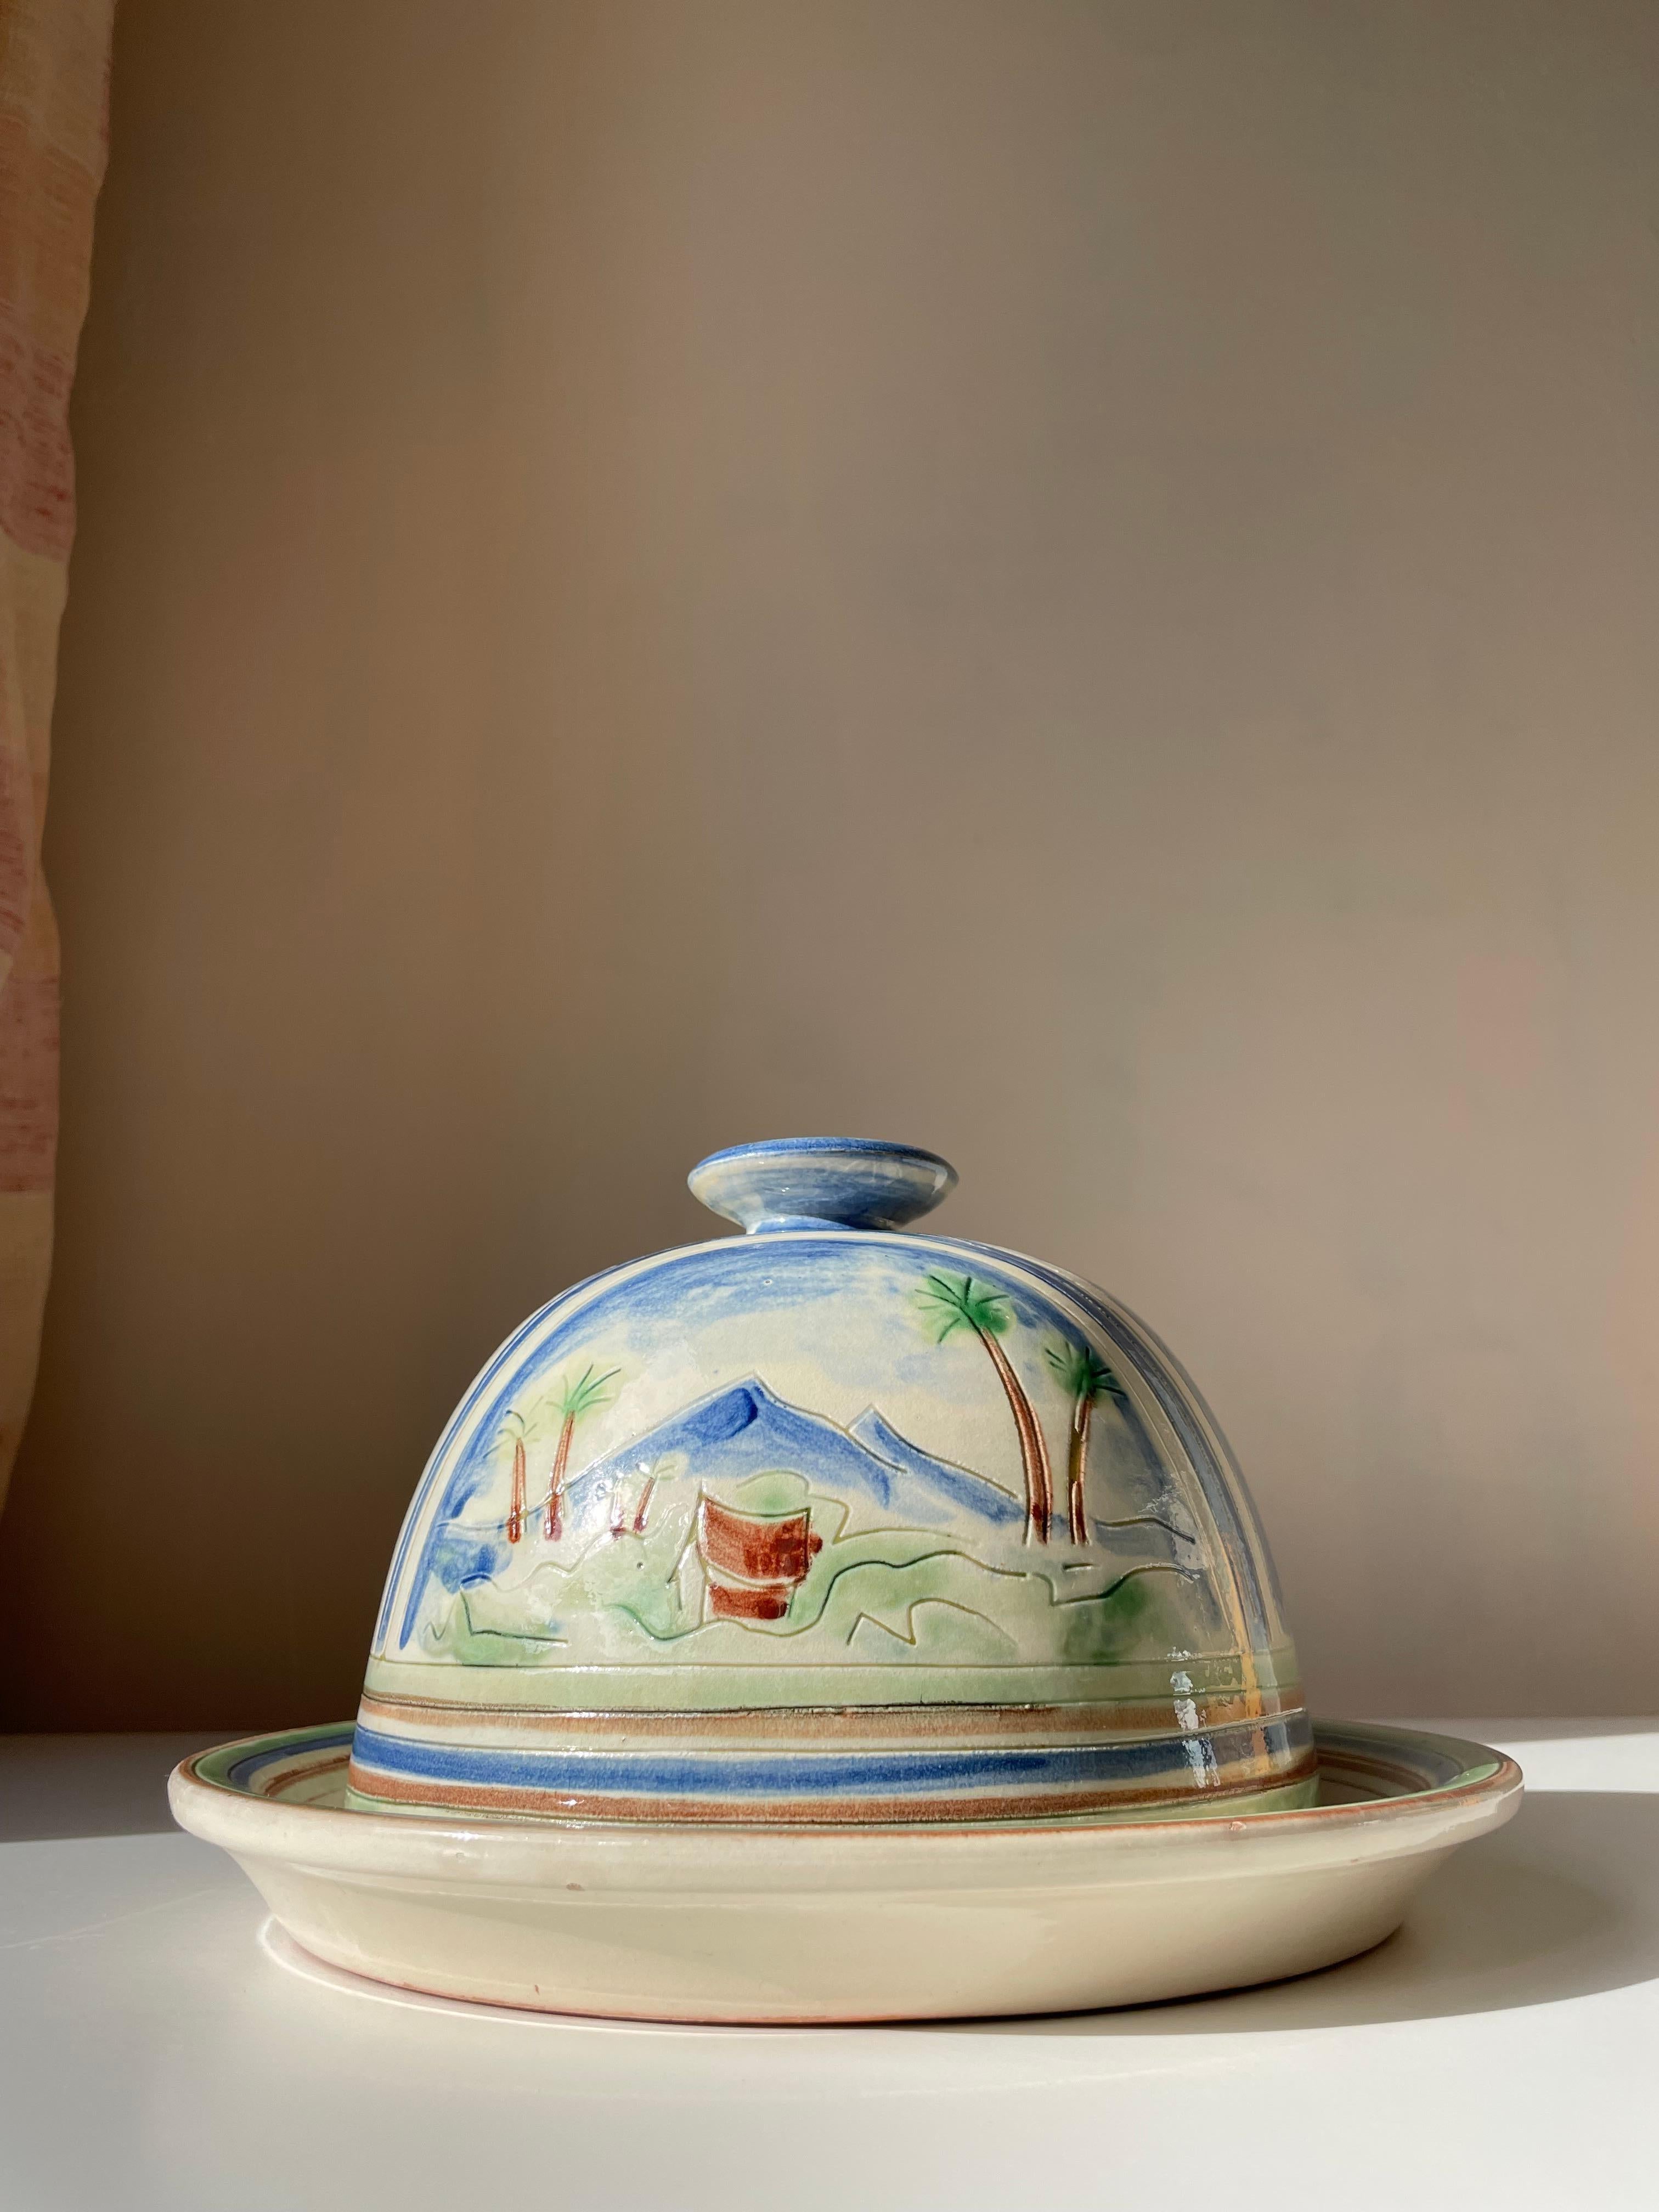 Handmade Danish 1950s Tropic Decor Ceramic Dome And Plate For Sale 4